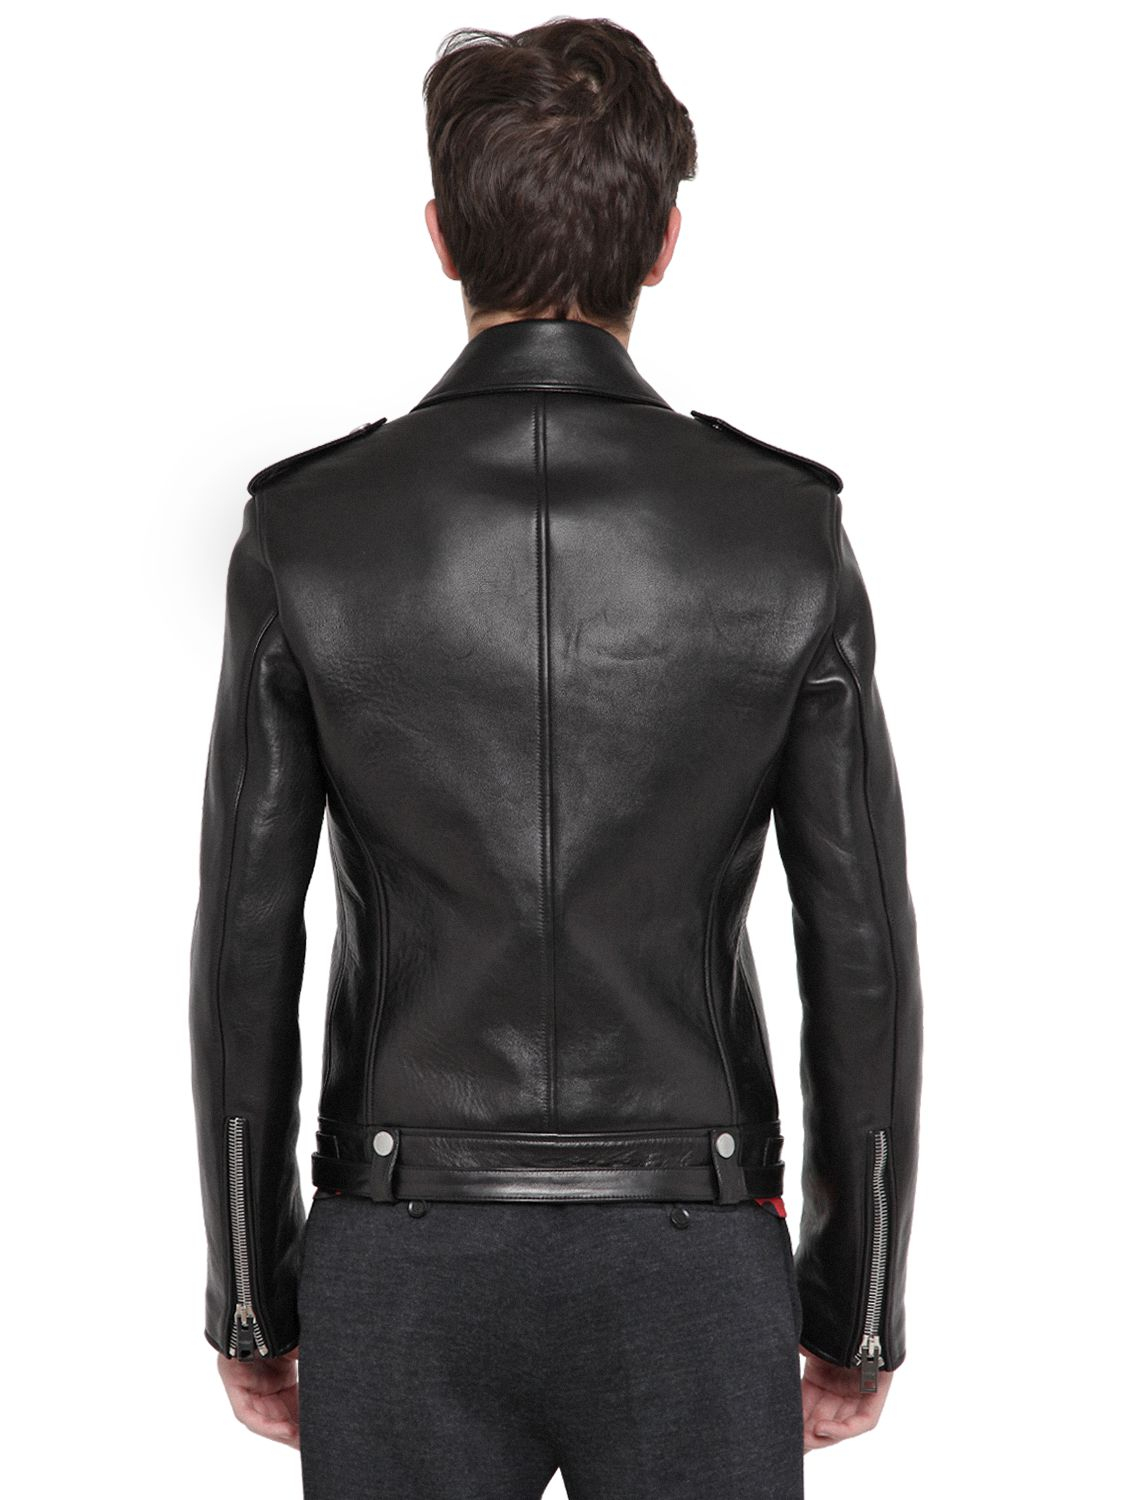 Lyst - Burberry Prorsum Soft Leather Biker Jacket in Black for Men